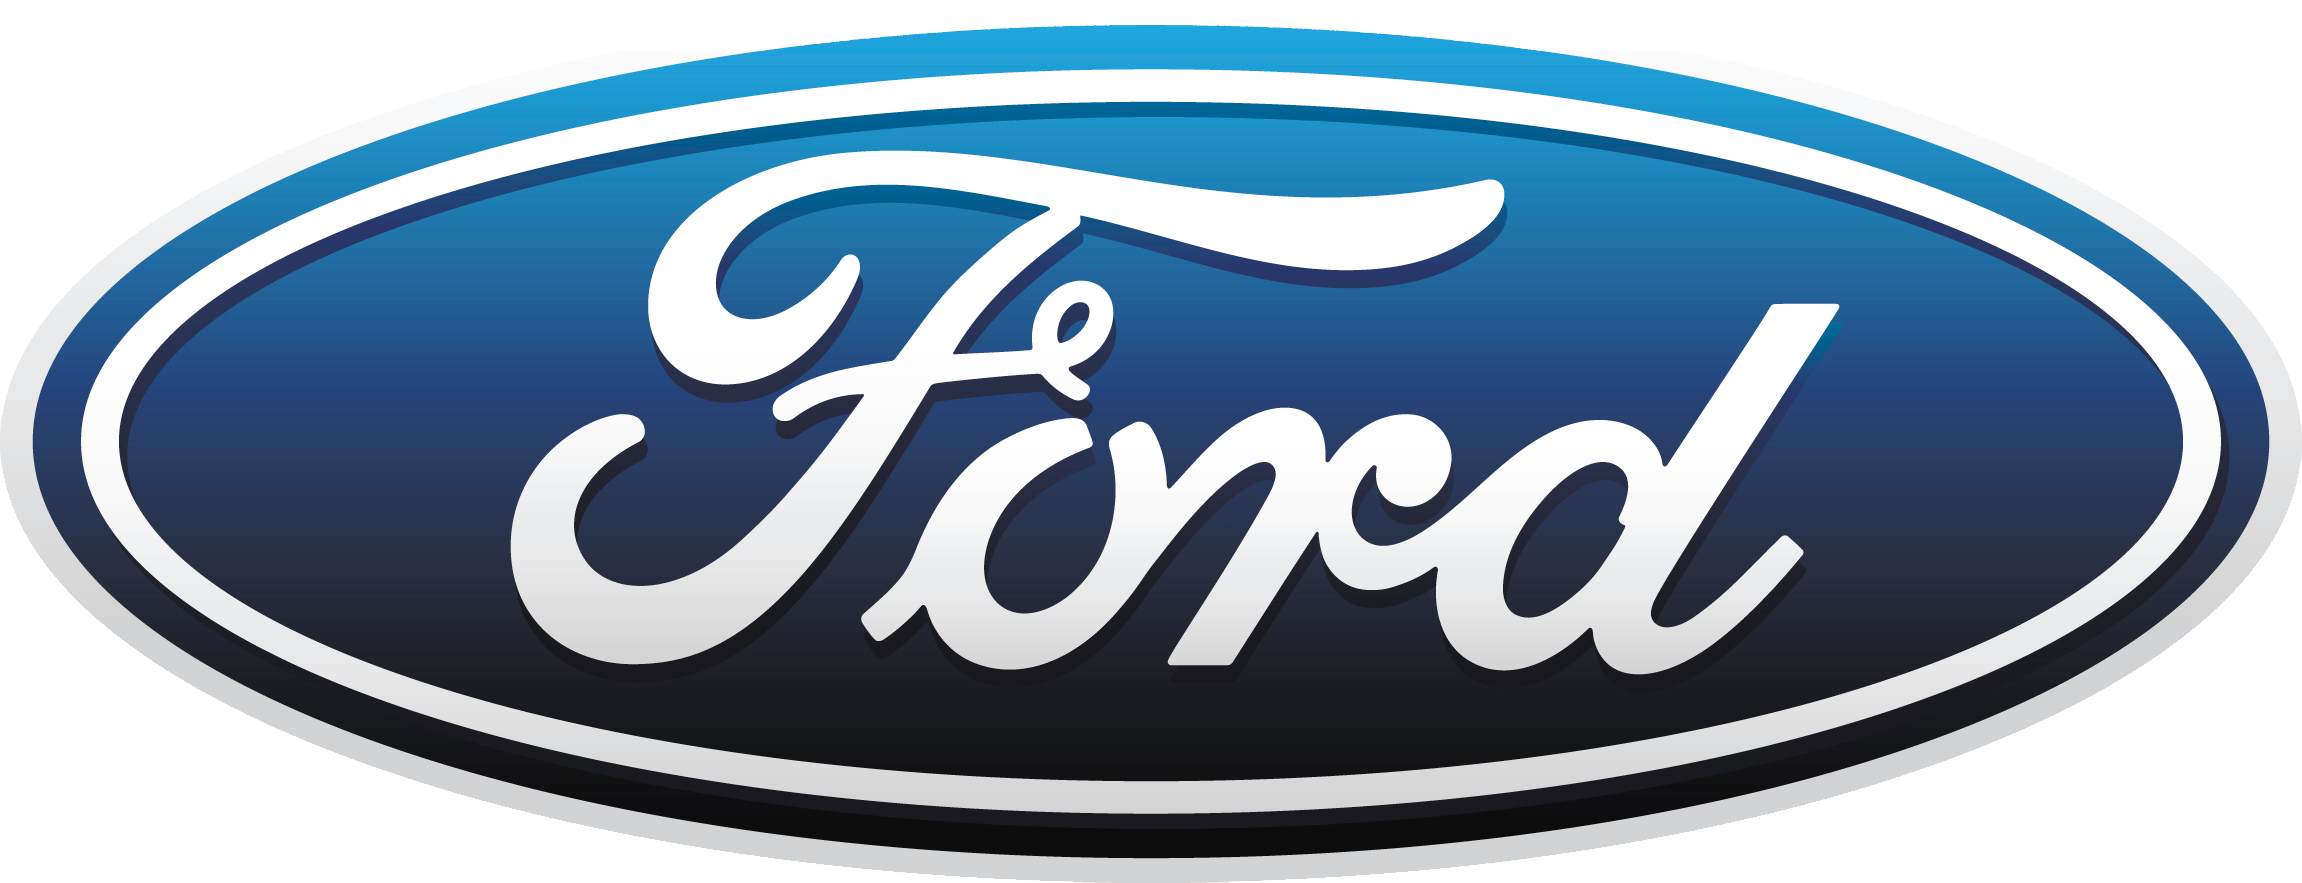 Car Company Fiesta Ford 2018 Motor Logo Clipart